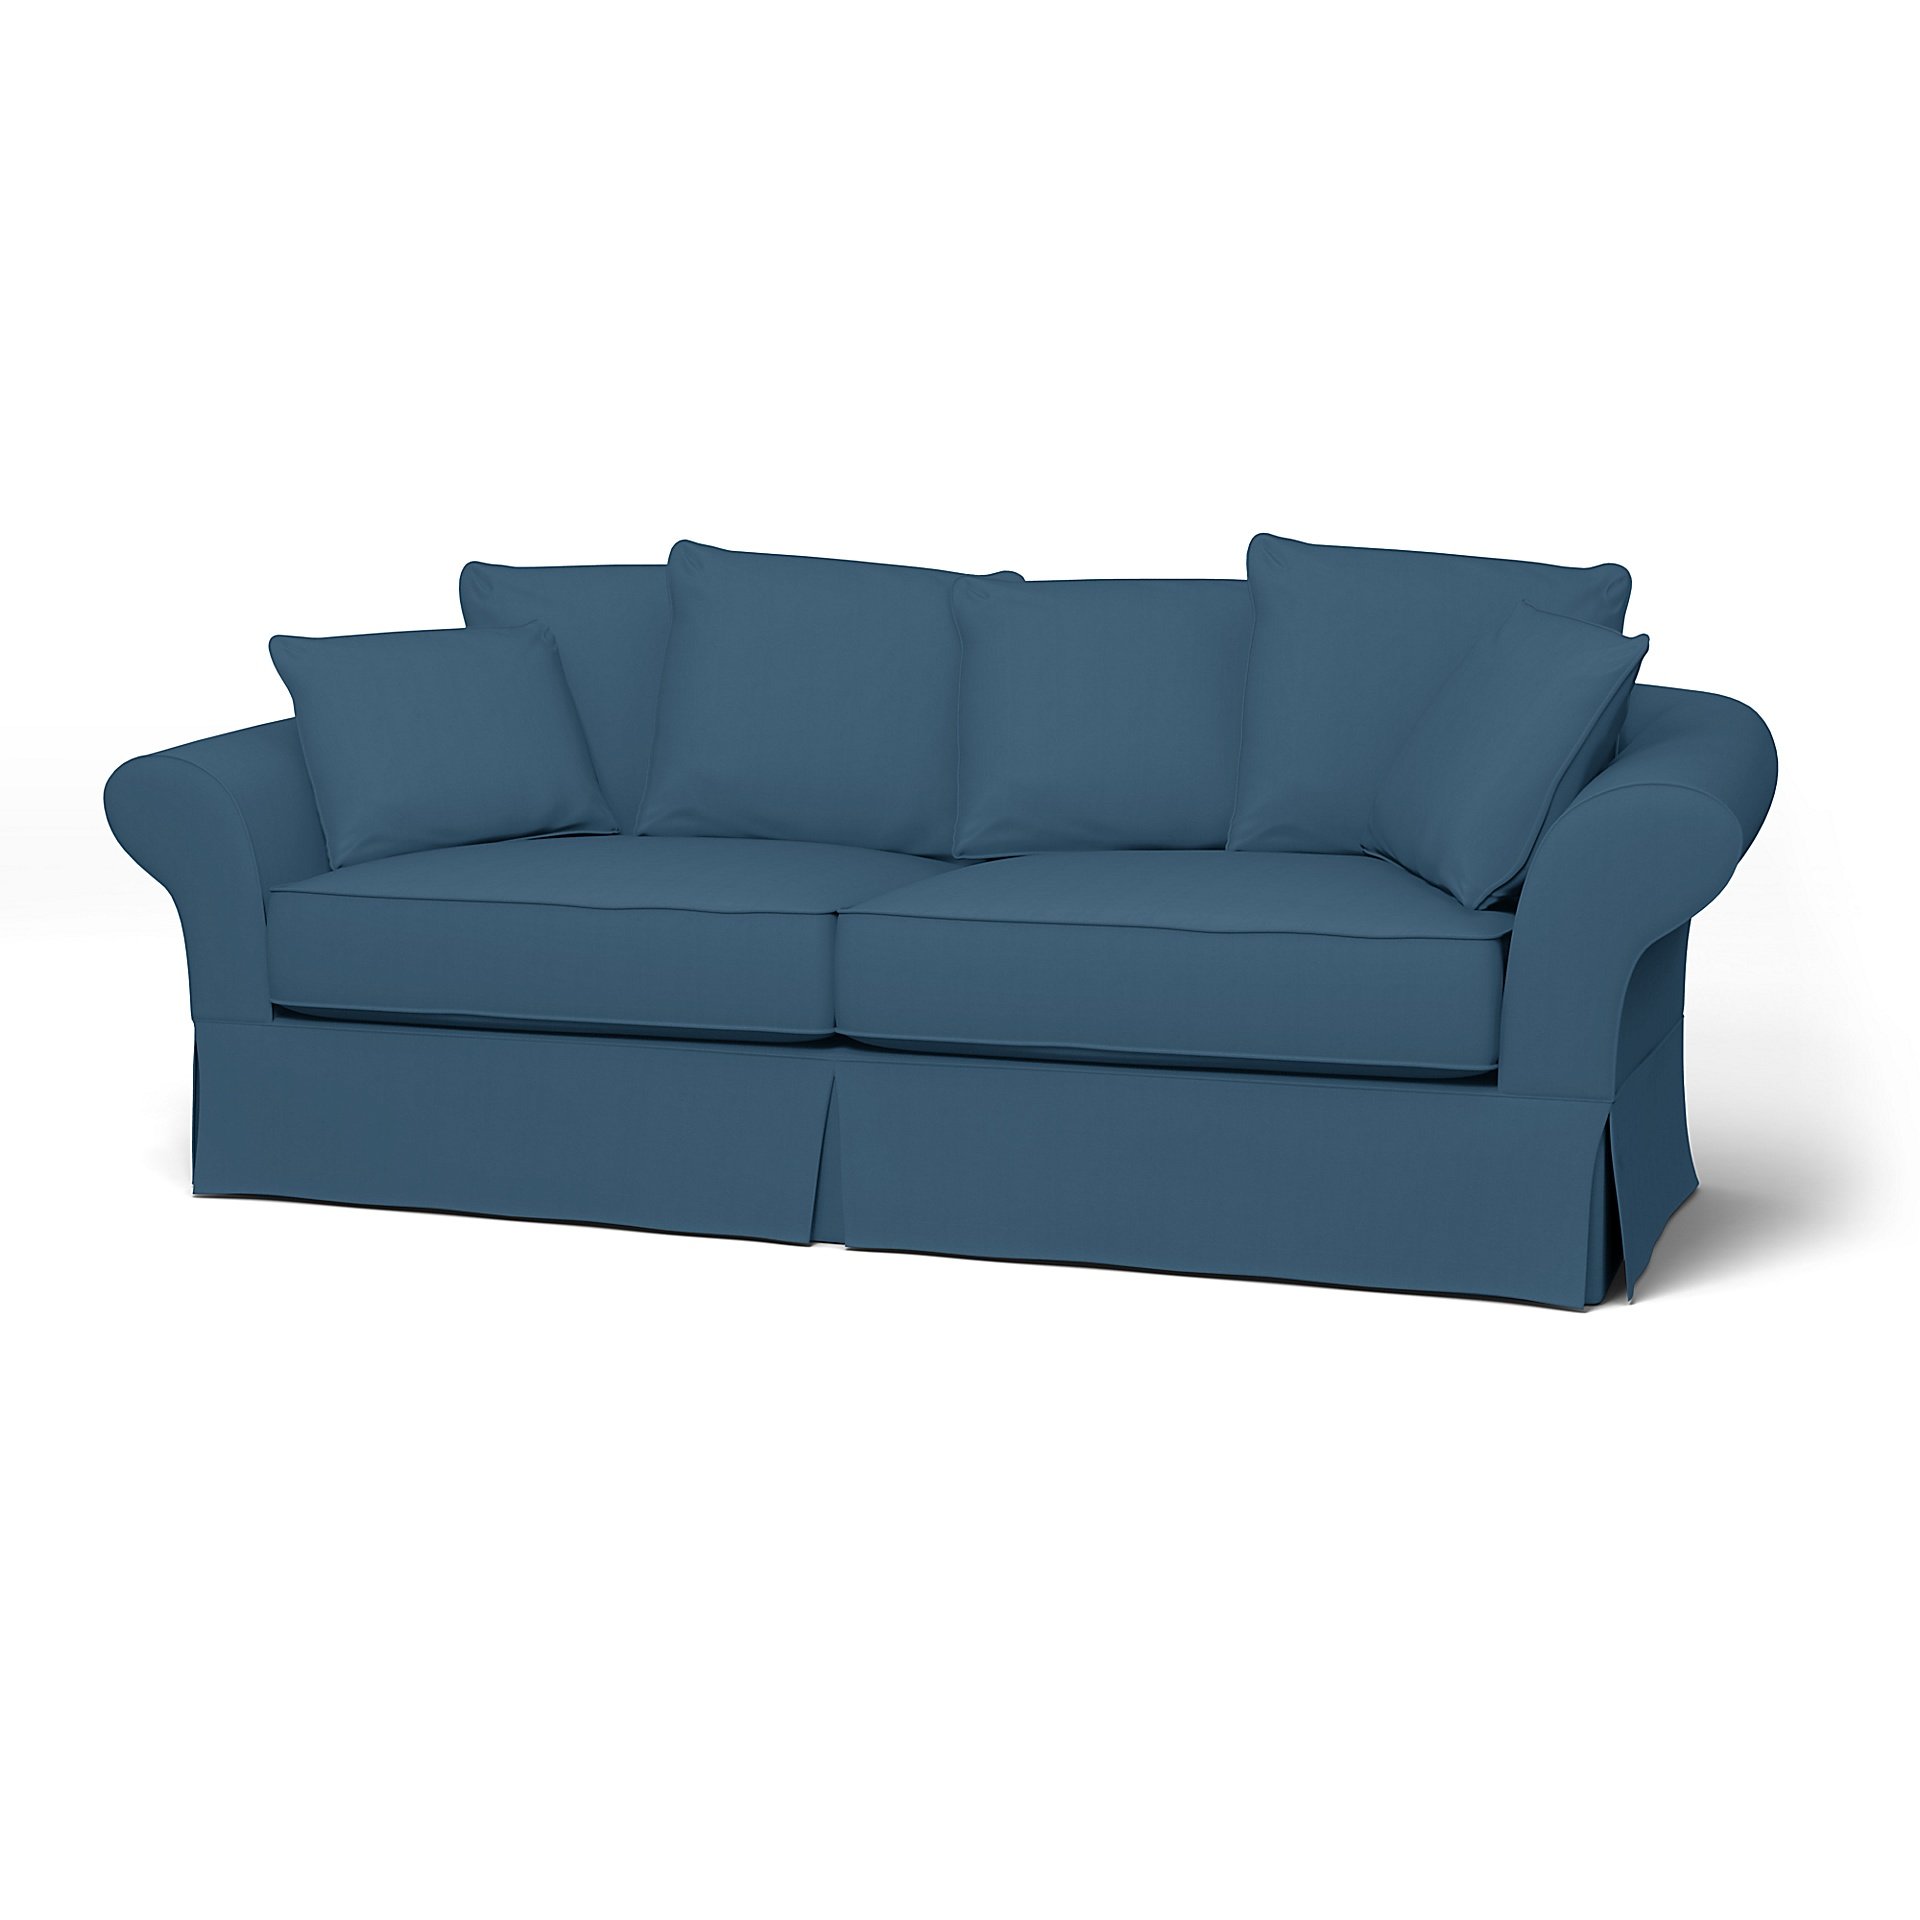 IKEA - Backamo 3 Seater Sofa Cover, Real Teal, Cotton - Bemz